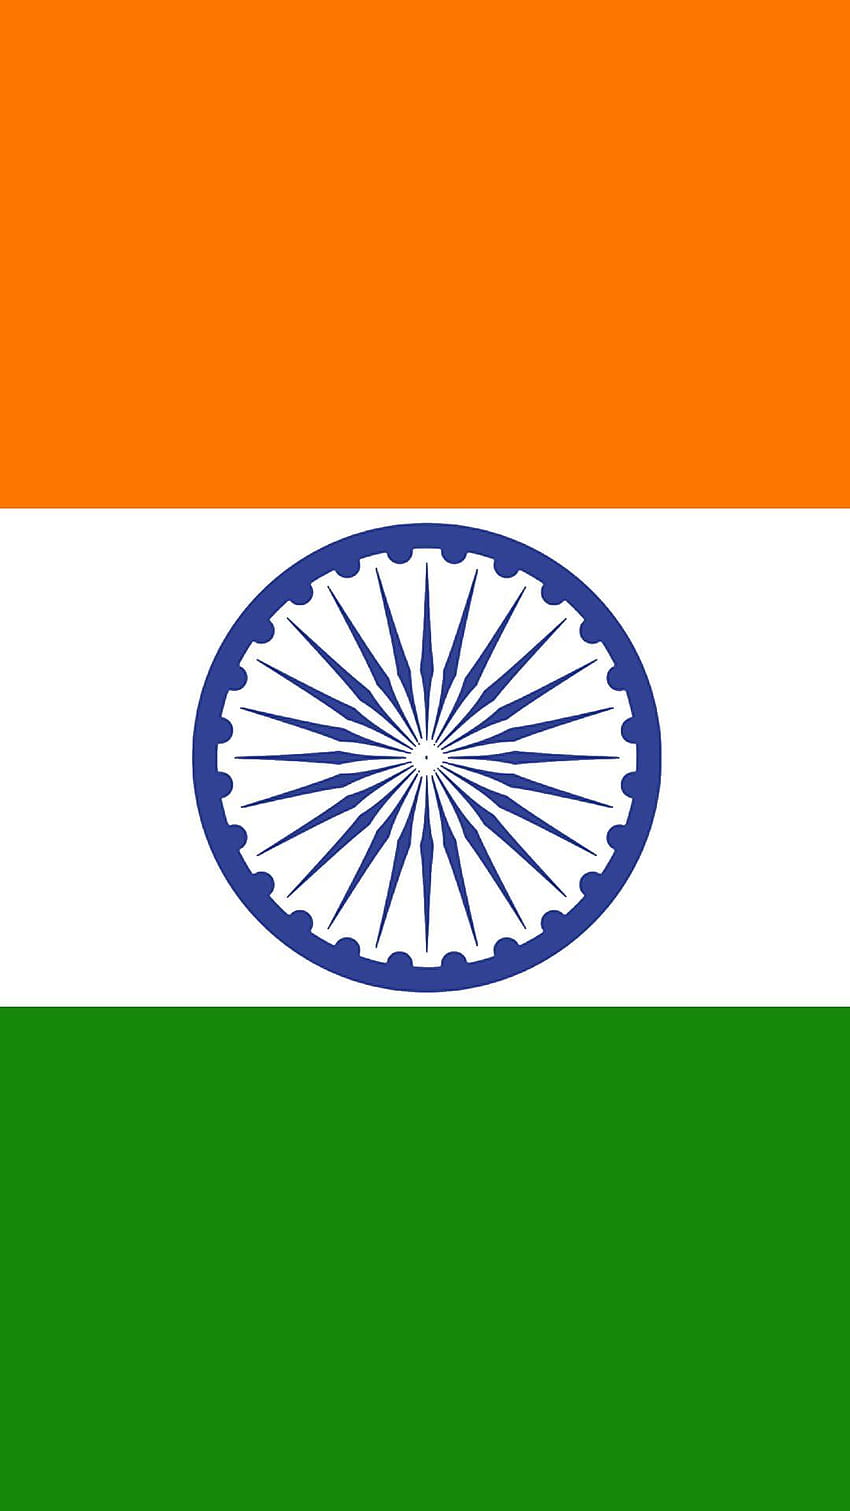 Bandera de India para teléfono móvil 01 de 17 – Tiranga, móvil de bandera india fondo de pantalla del teléfono